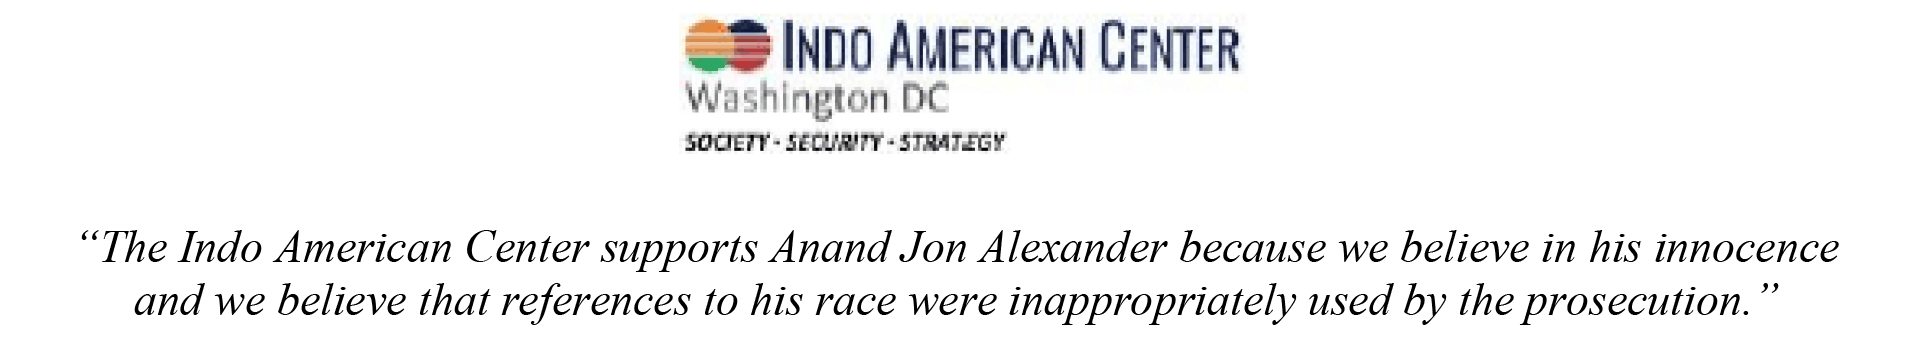 The Indo American Center